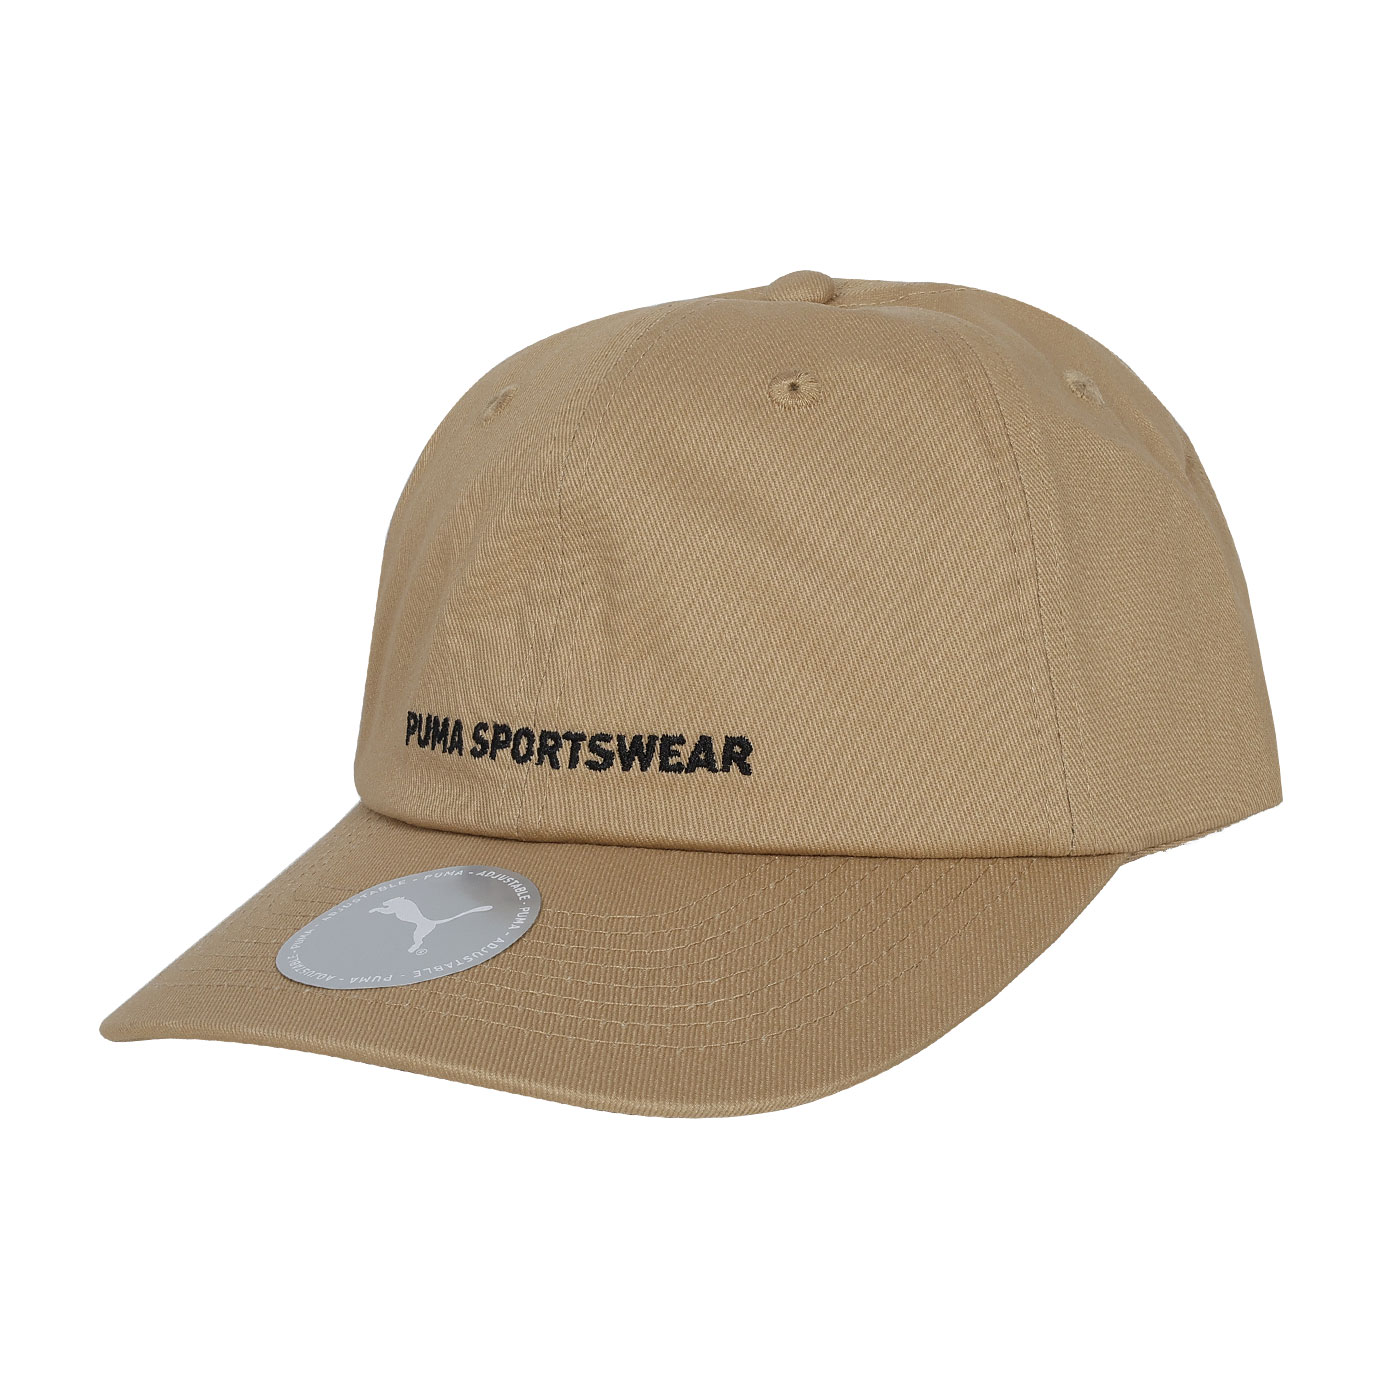 PUMA 基本系列 Sportswear 棒球帽  02403611